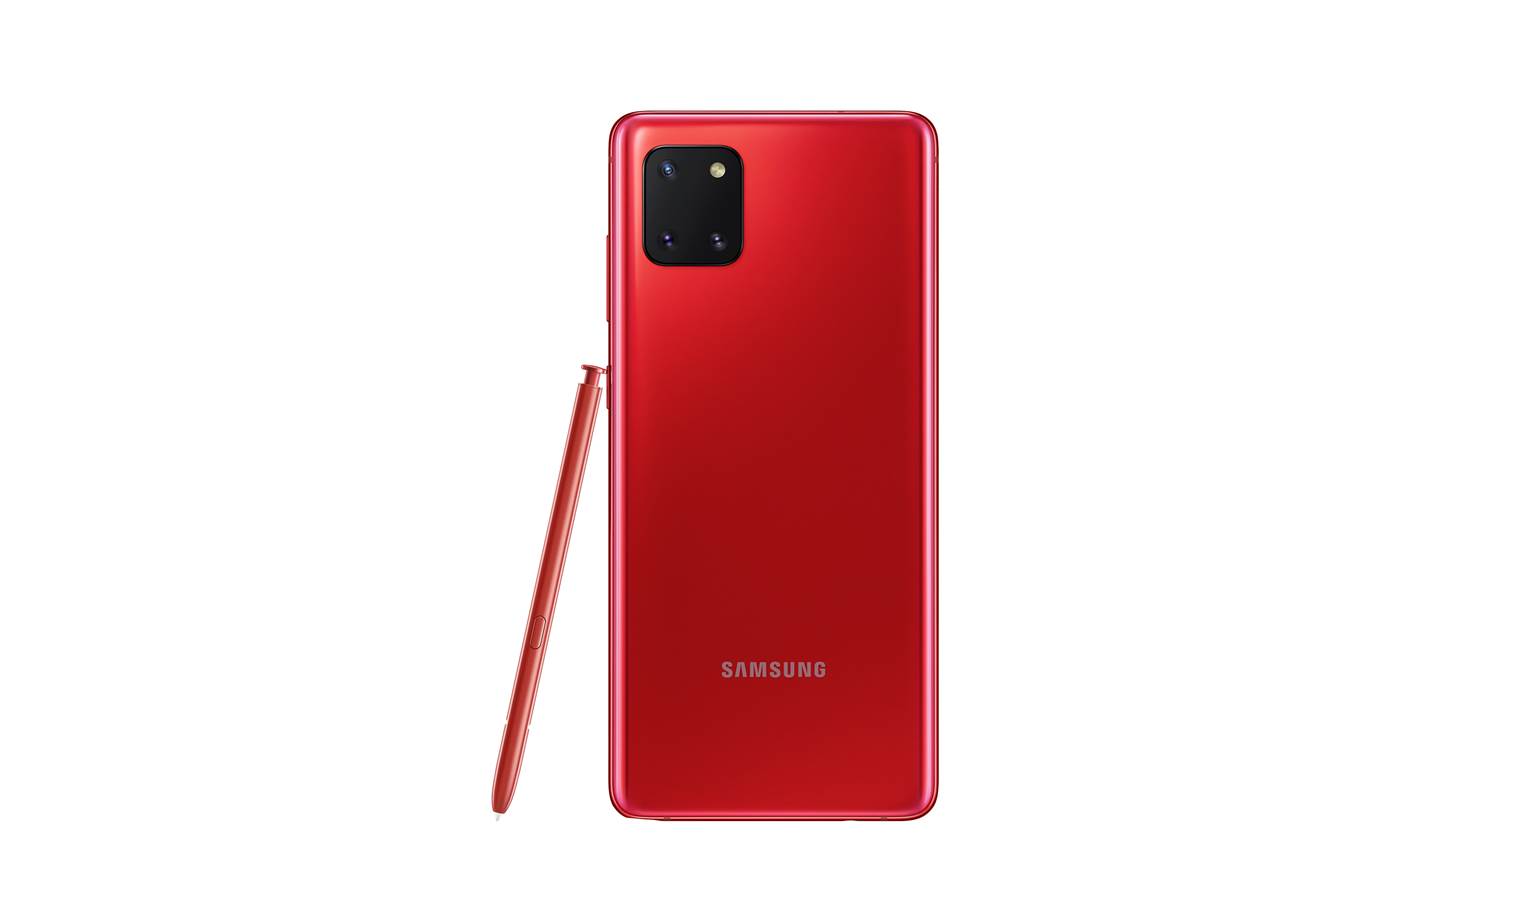 Harga Samsung Galaxy J7 Pro Dan Spesifikasi Februari 2020